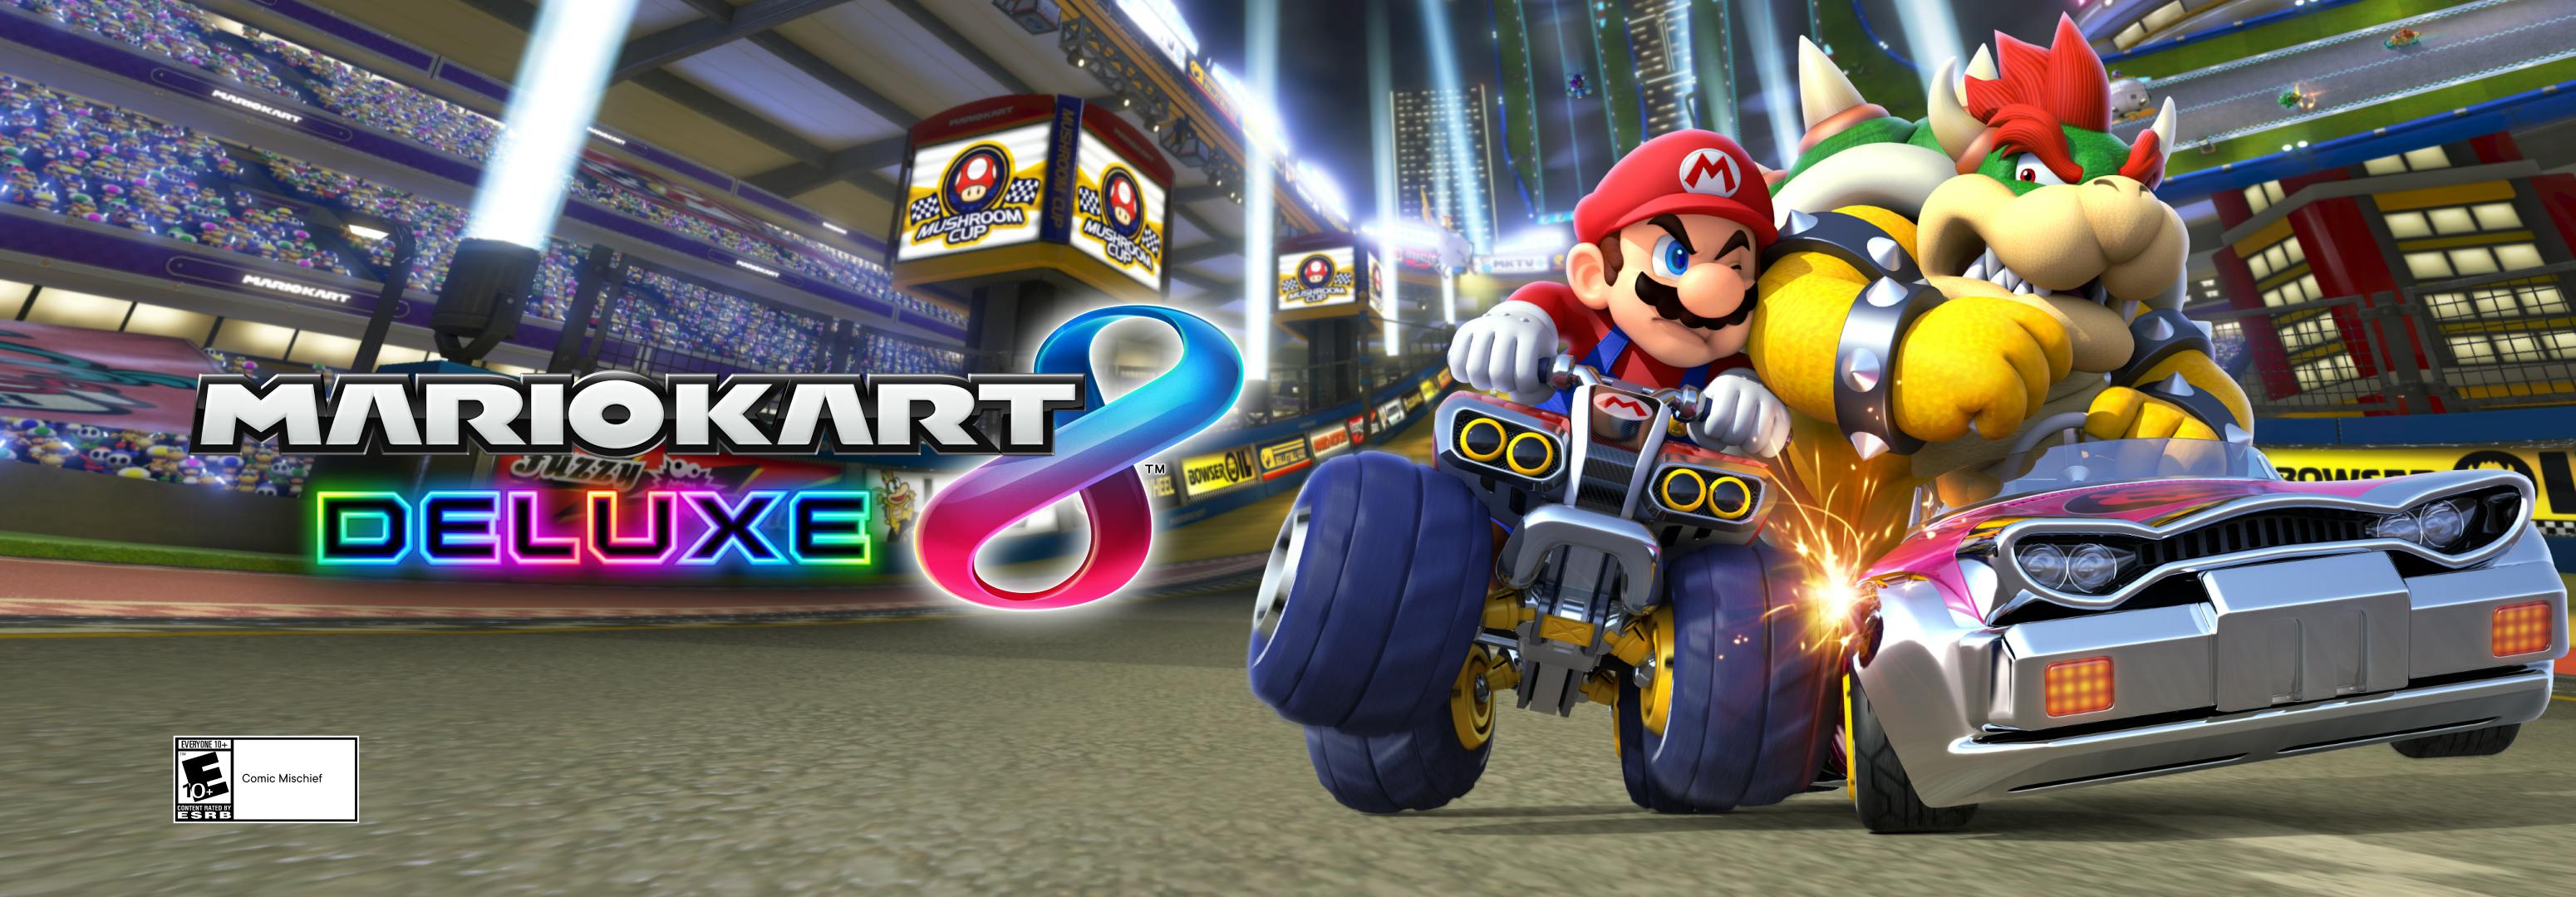 Mario Kart™ 8 Deluxe for Nintendo Switch - Nintendo Official Site